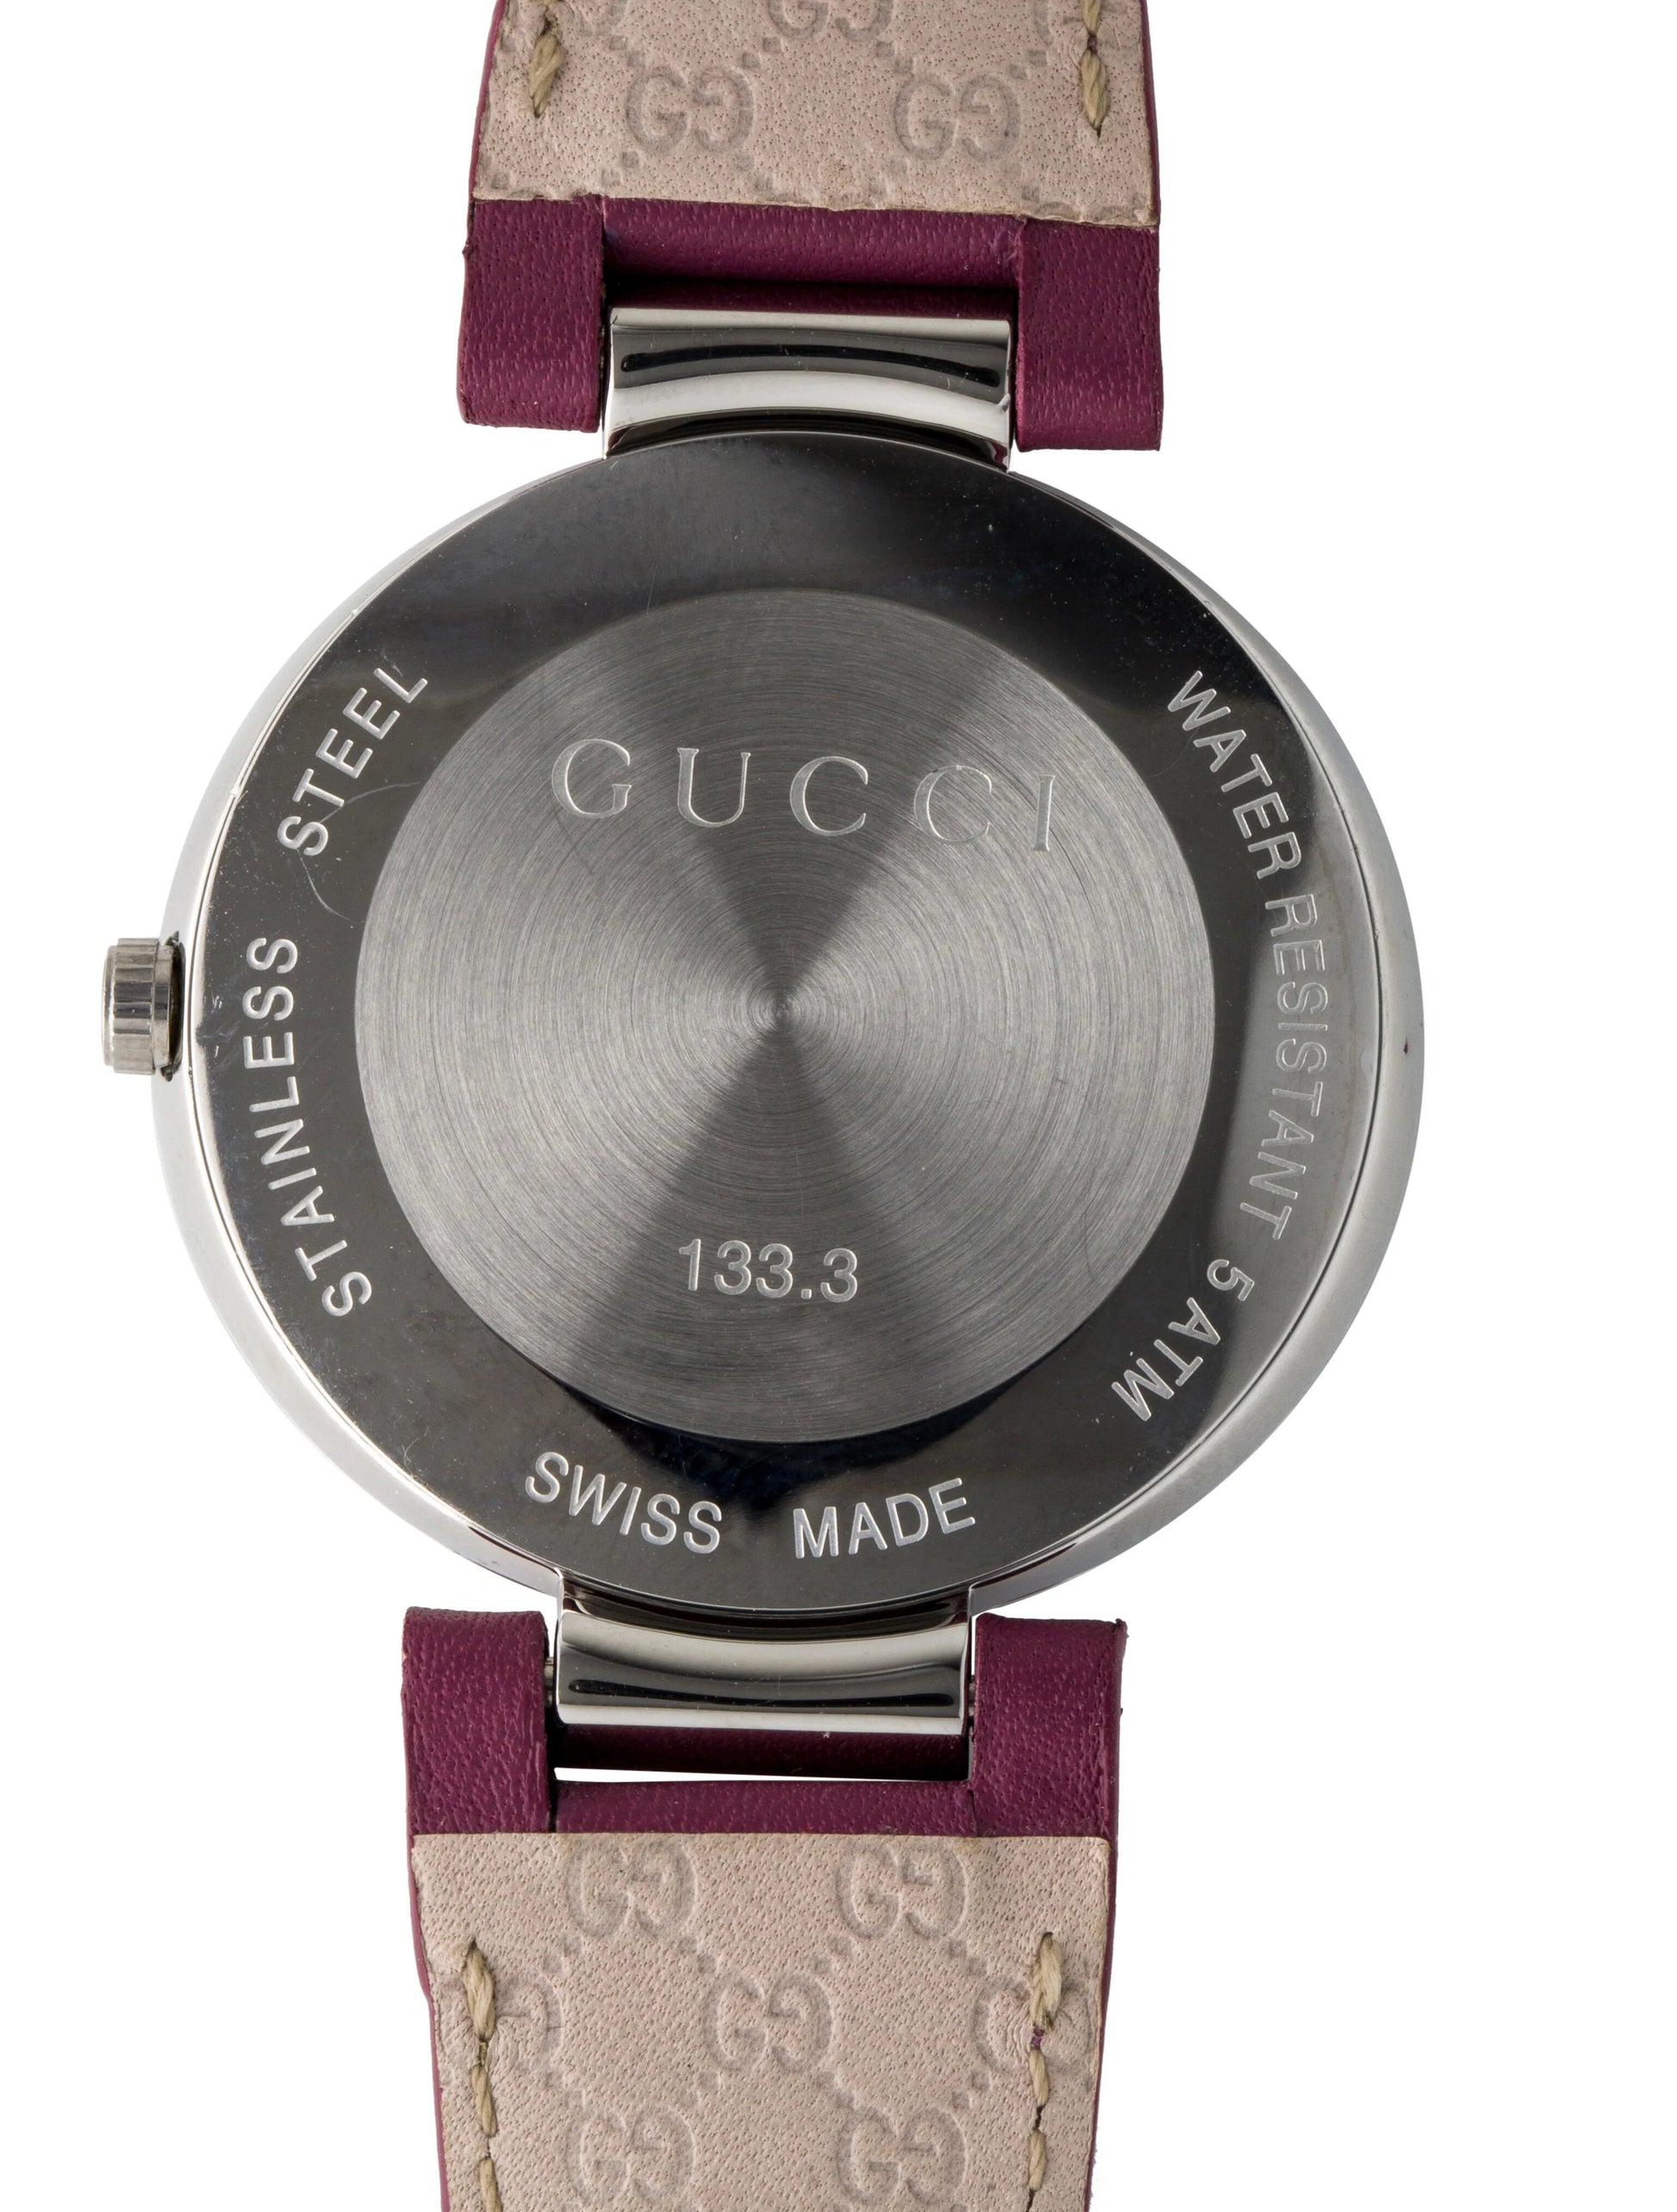 Gucci Interlocking G Quartz Pink Dial Pink Leather Strap Watch For Women - YA133321